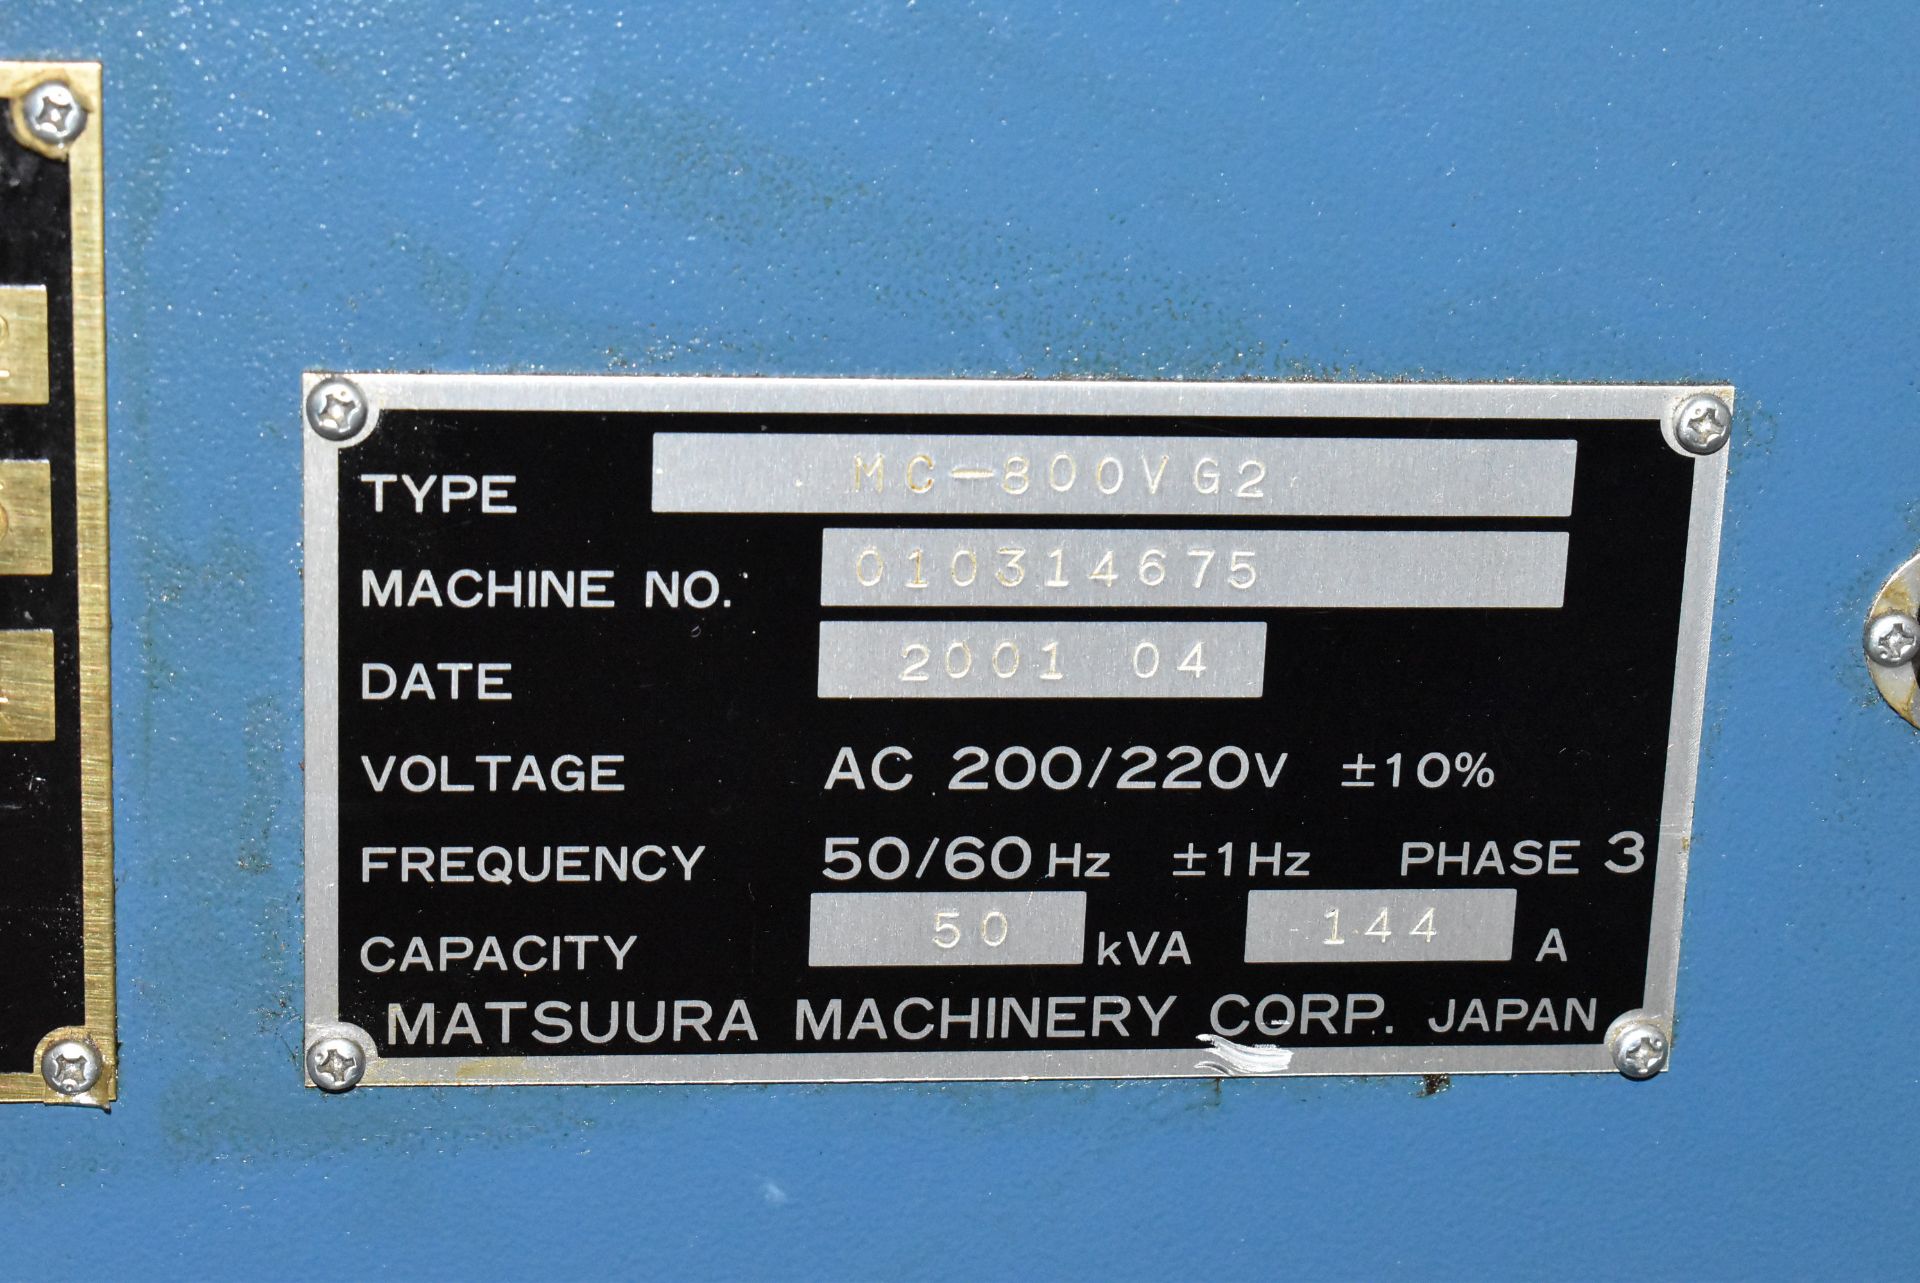 MATSUURA (2001) MC-800VG2 VERTICAL MACHINING CENTER WITH YASNAC CNC CONTROL, 45.27" X 20.07" - Image 13 of 18